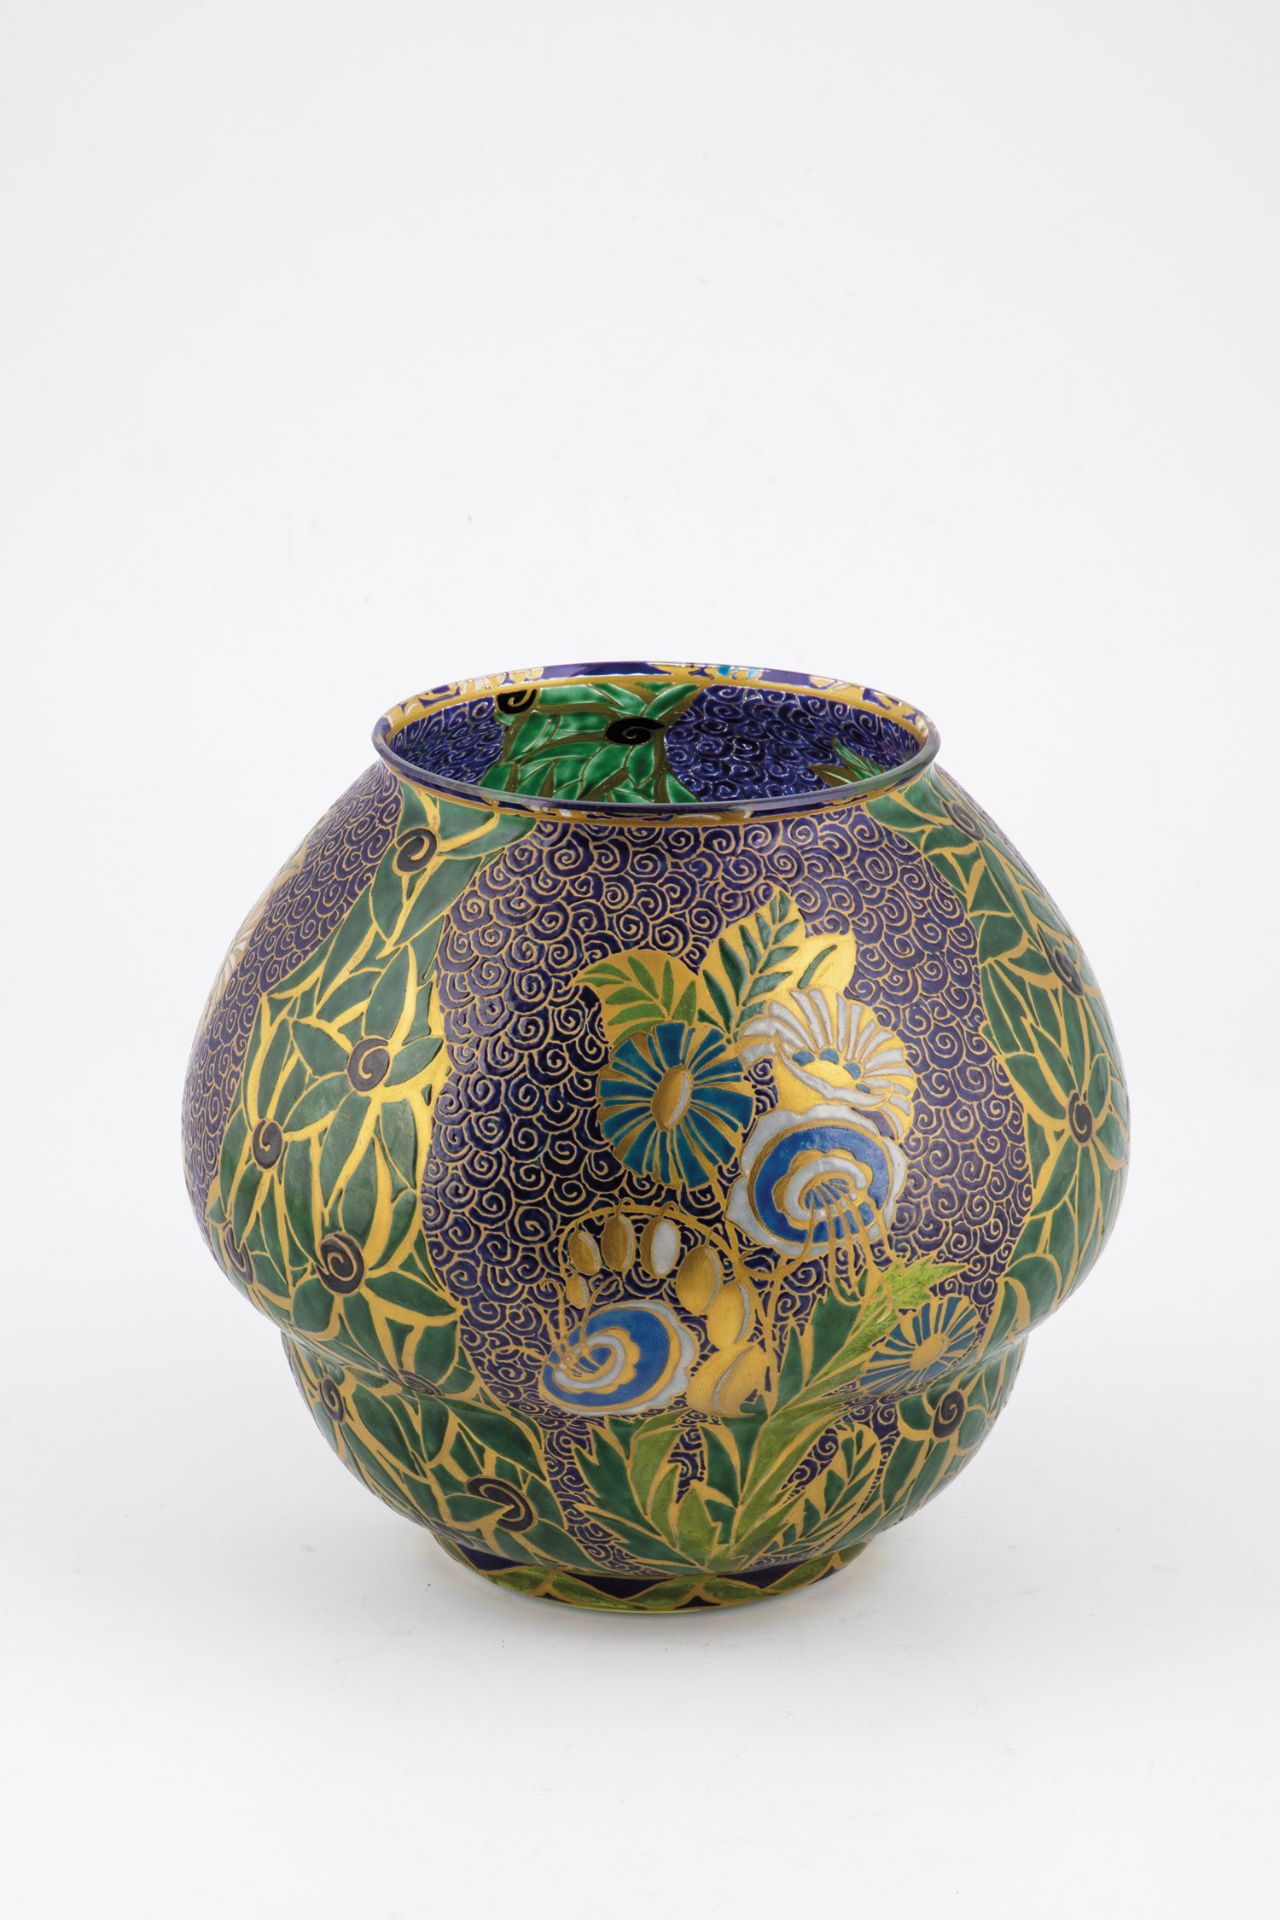 Ball Vase Auguste Heiligenstein, for Verrerie de Leune, c. 1920-30 Colourless glass decorated with